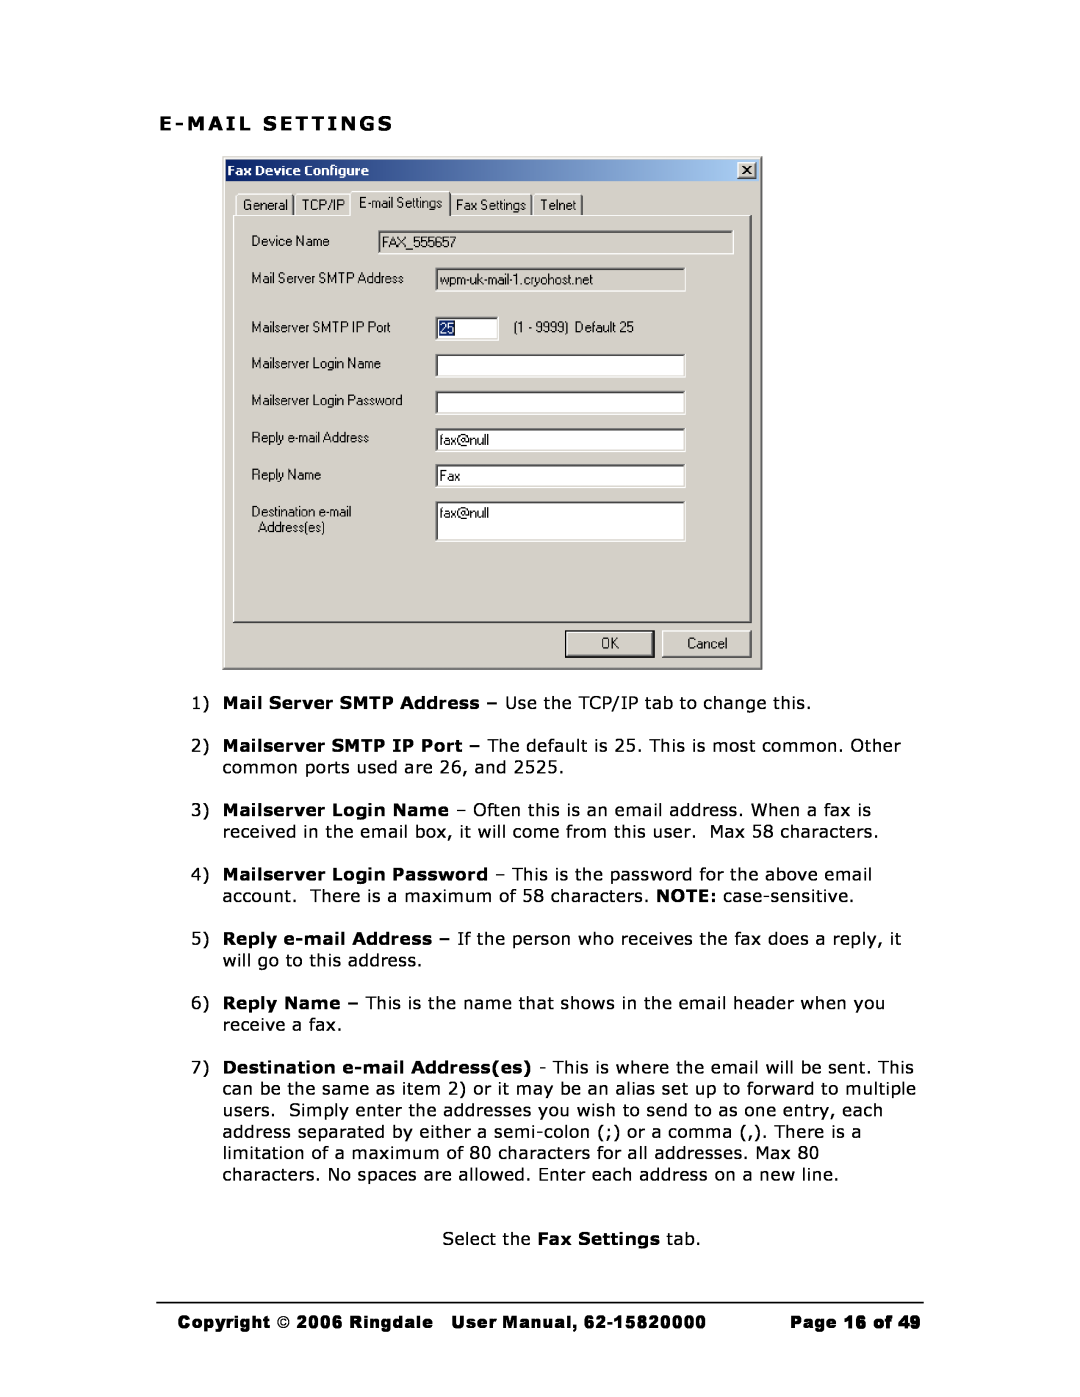 Black Box MC200A user manual E-Mail Settings, Copyright  2006 Ringdale User Manual, Page 16 of 